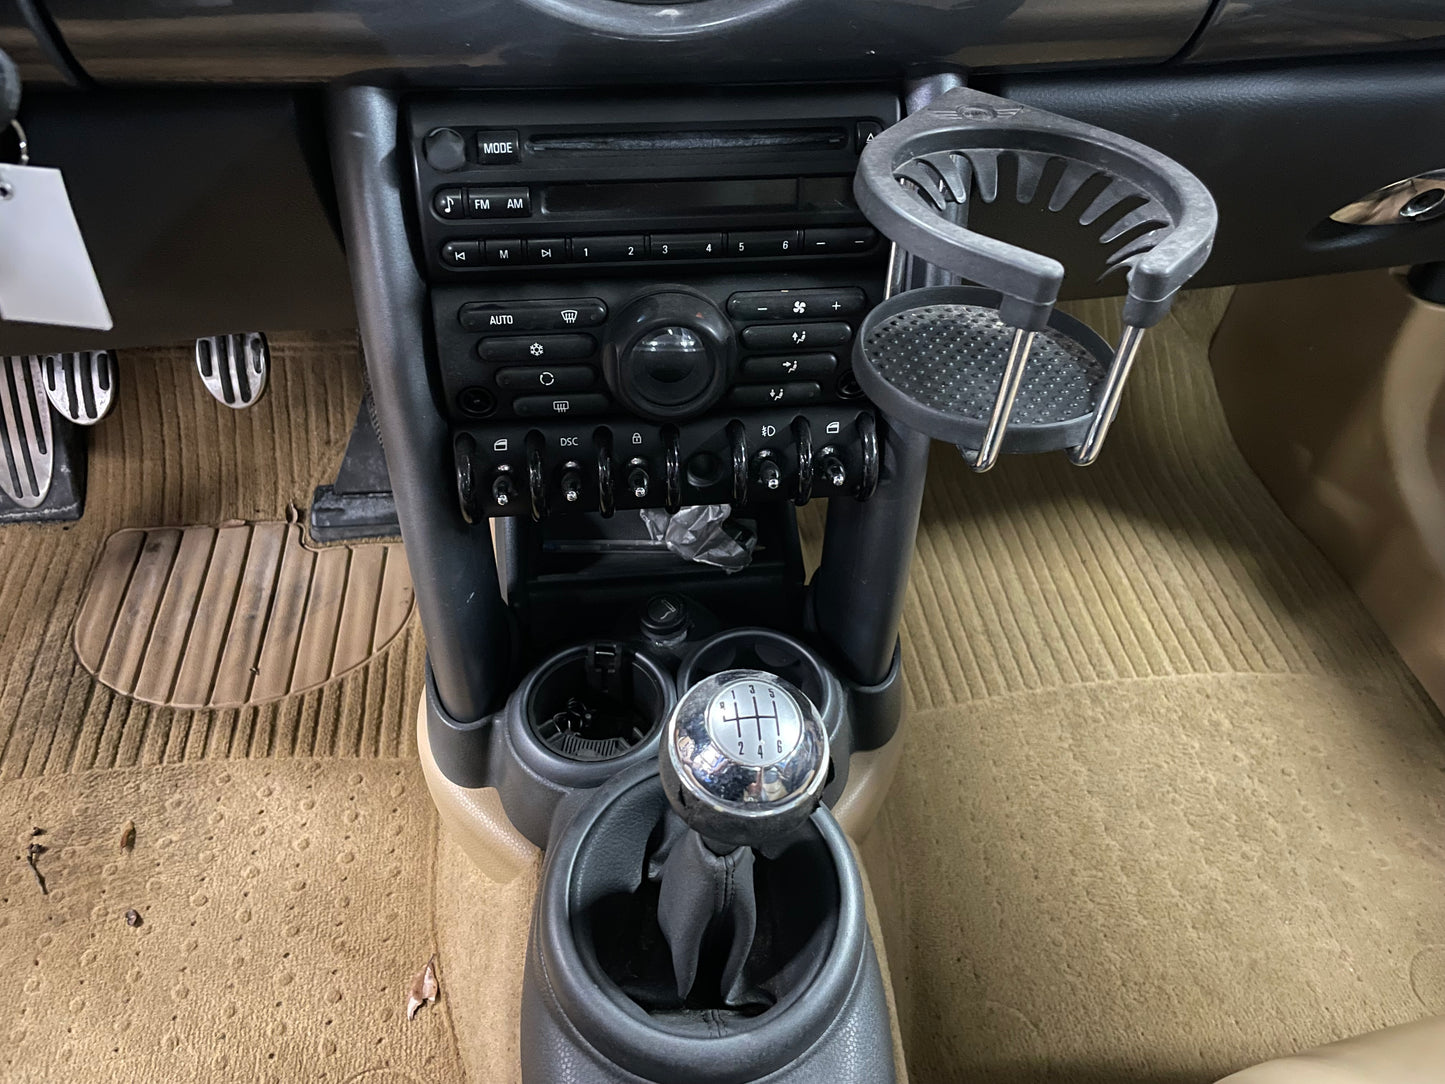 2005 MINI Cooper S, New Parts Car (December 2022) Stk #346